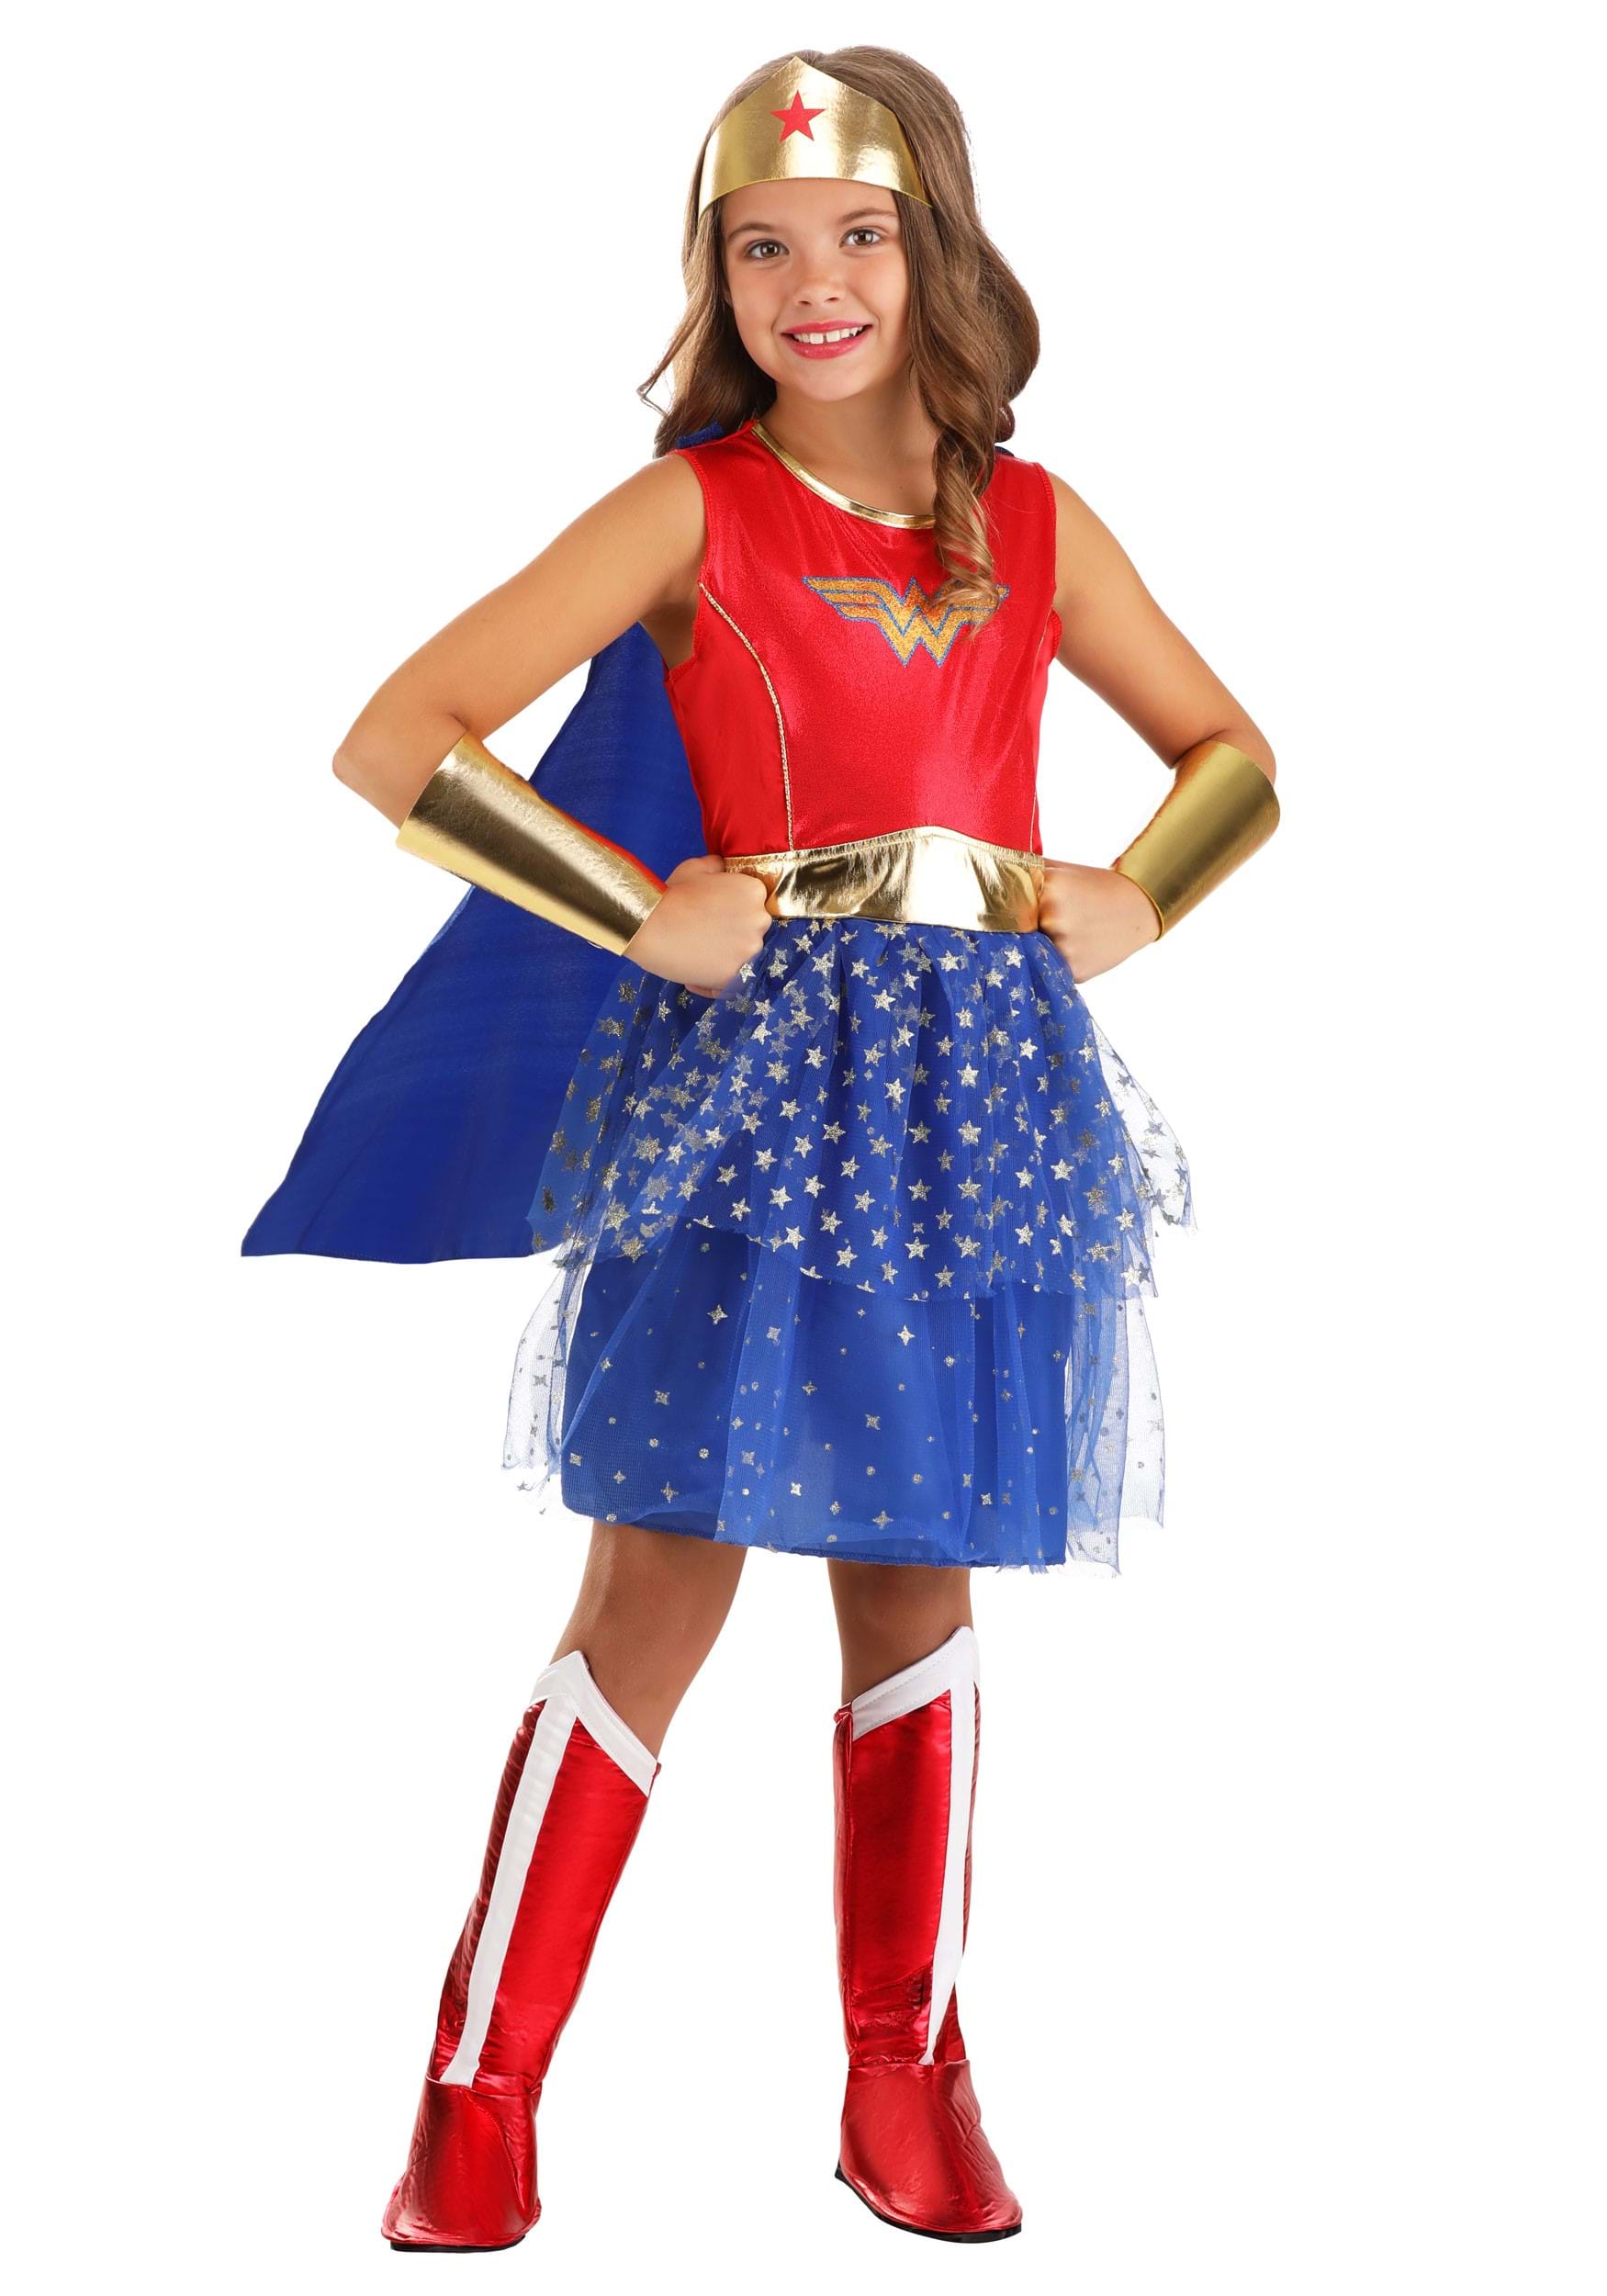 Lynda Carter reveals what happened to the original 'Wonder Woman' costume